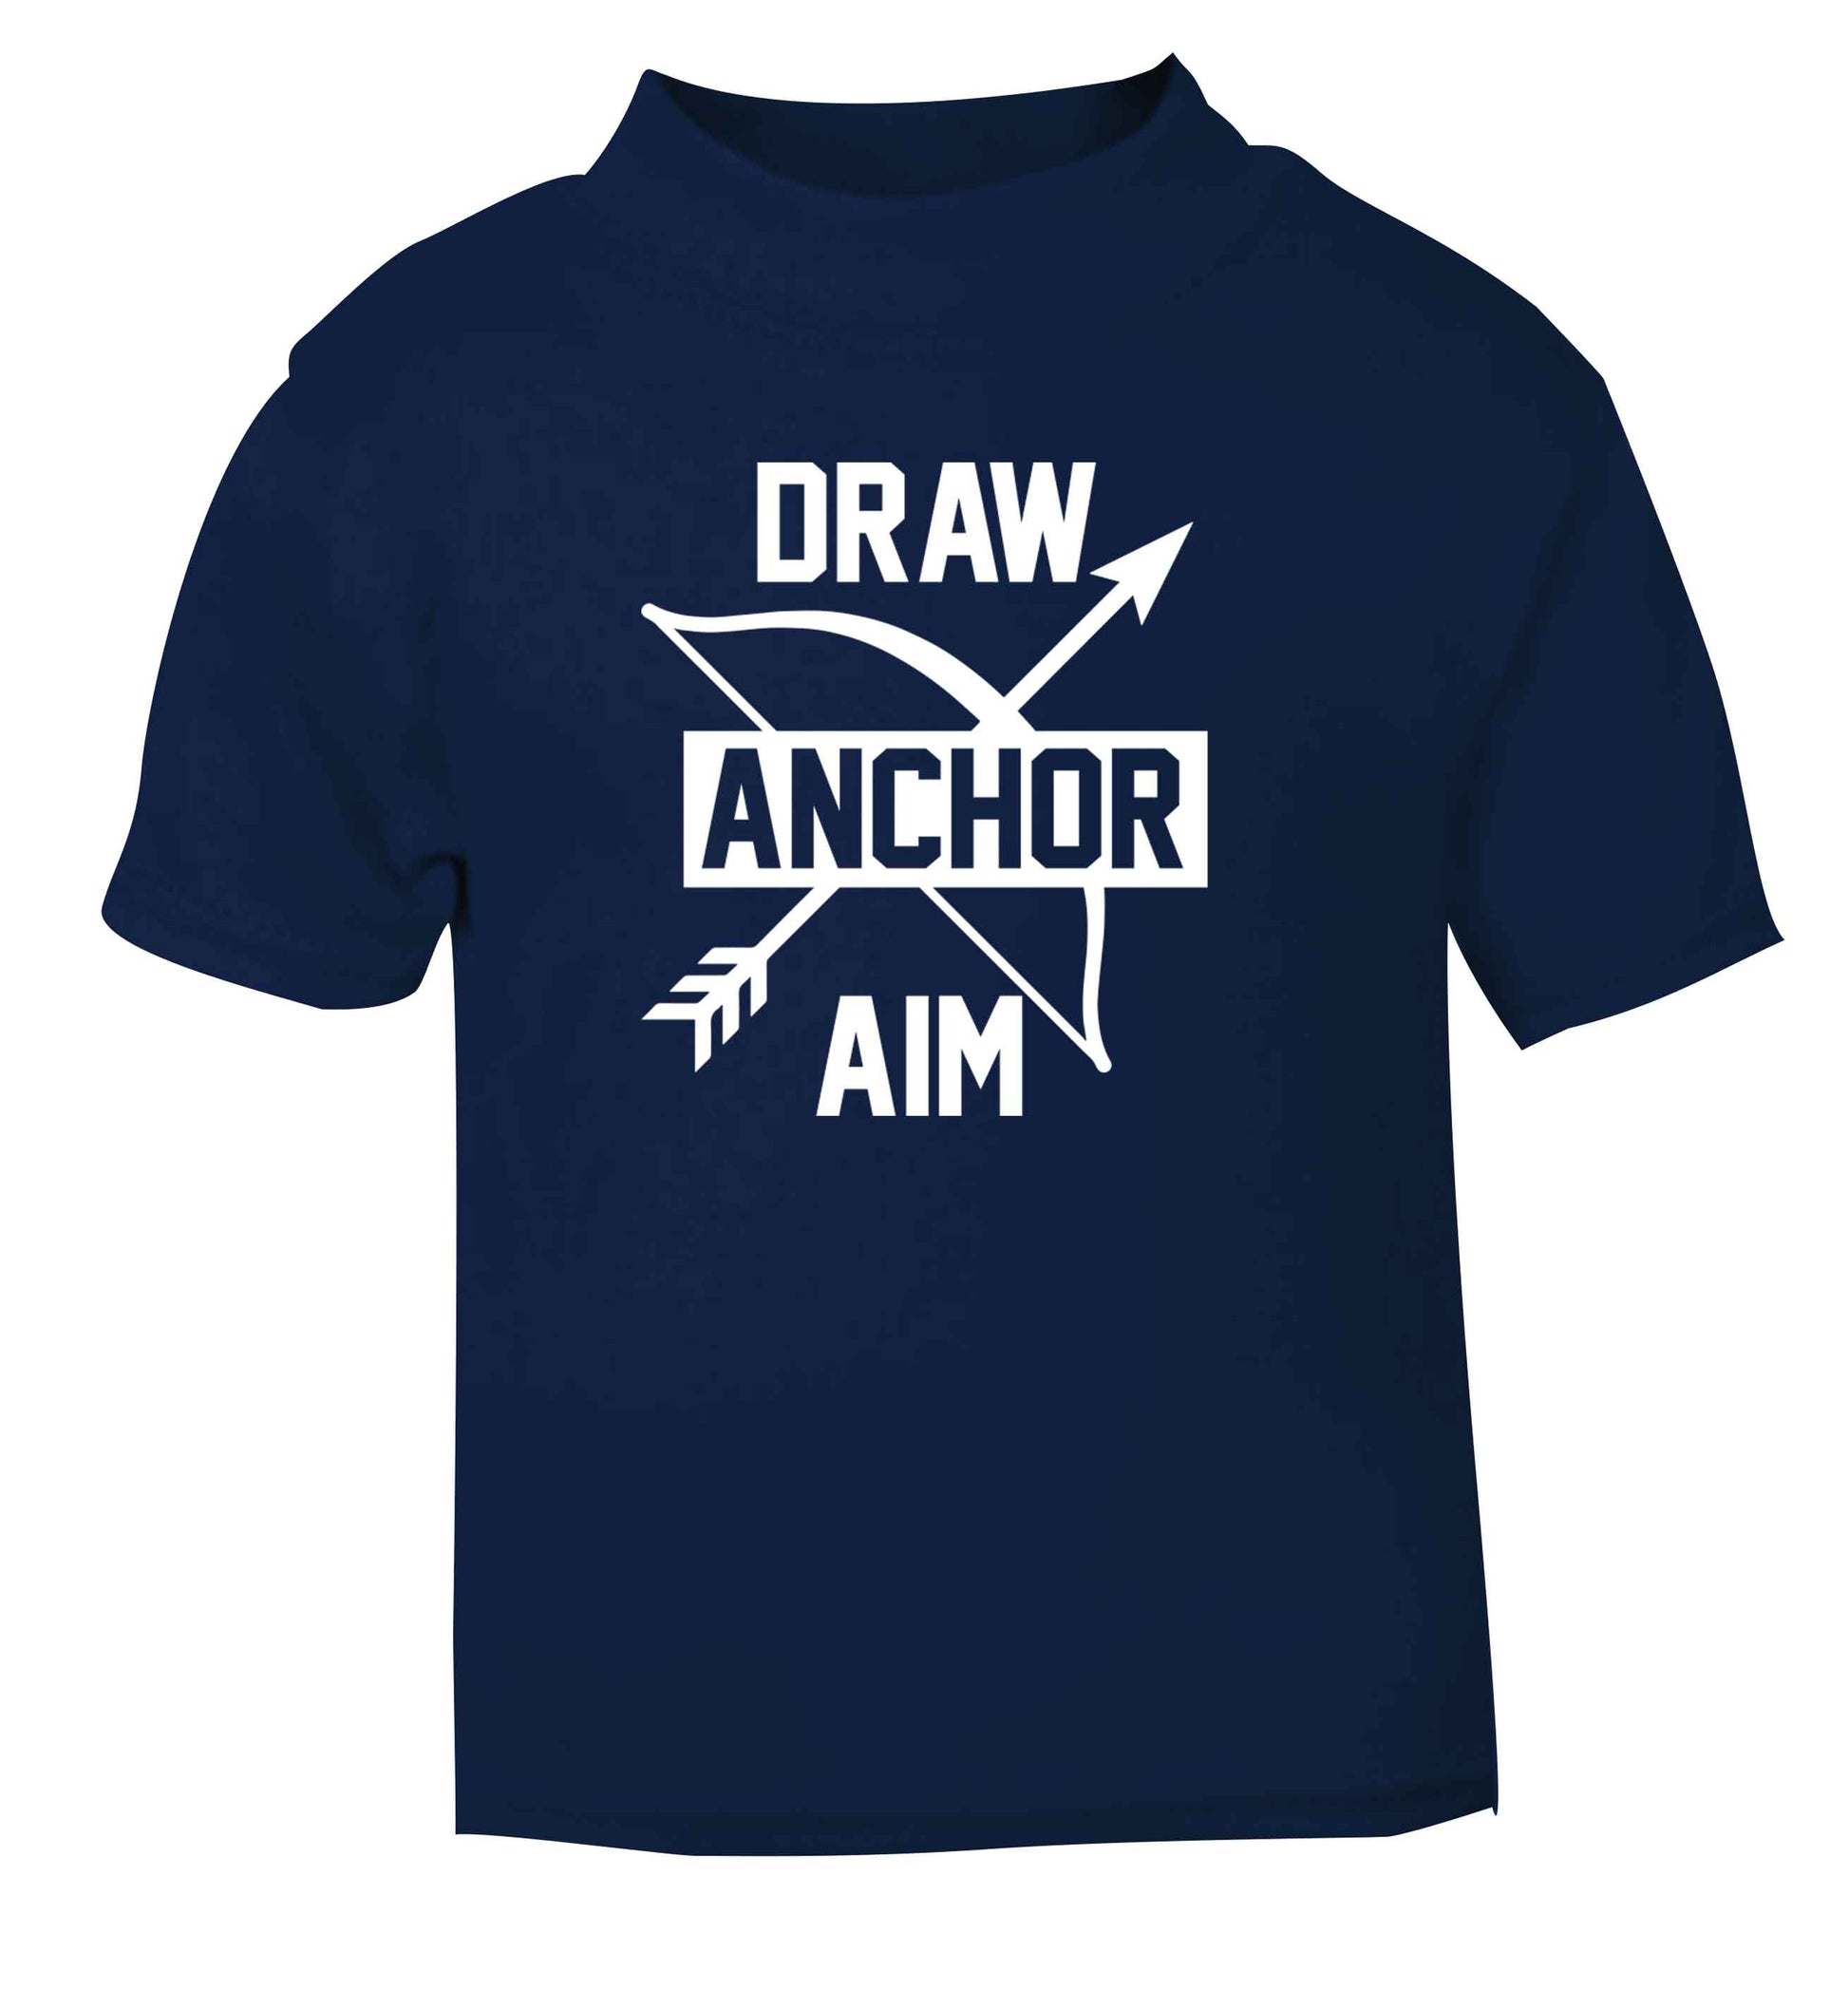 Draw anchor aim navy Baby Toddler Tshirt 2 Years